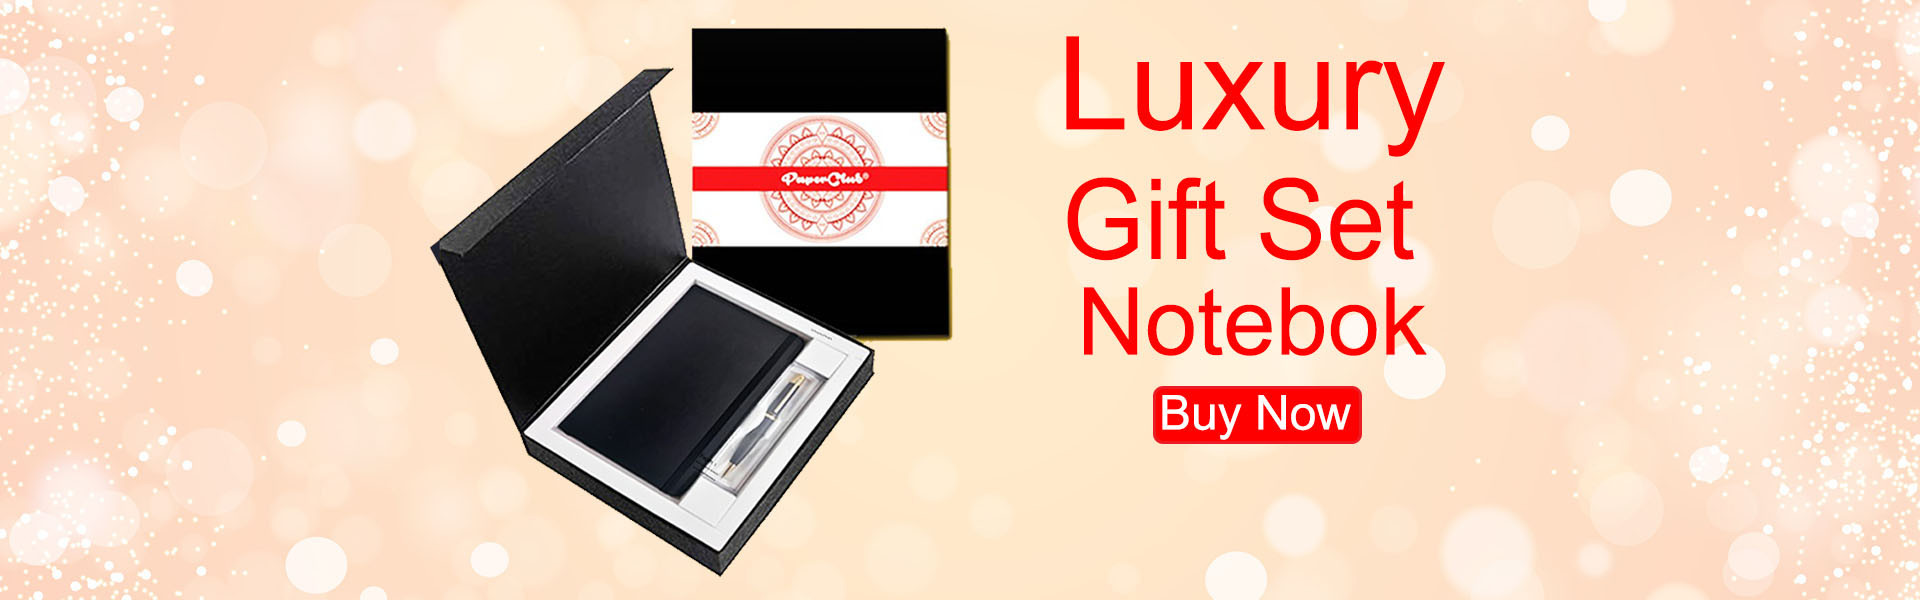 Luxury Gift Set Notebook